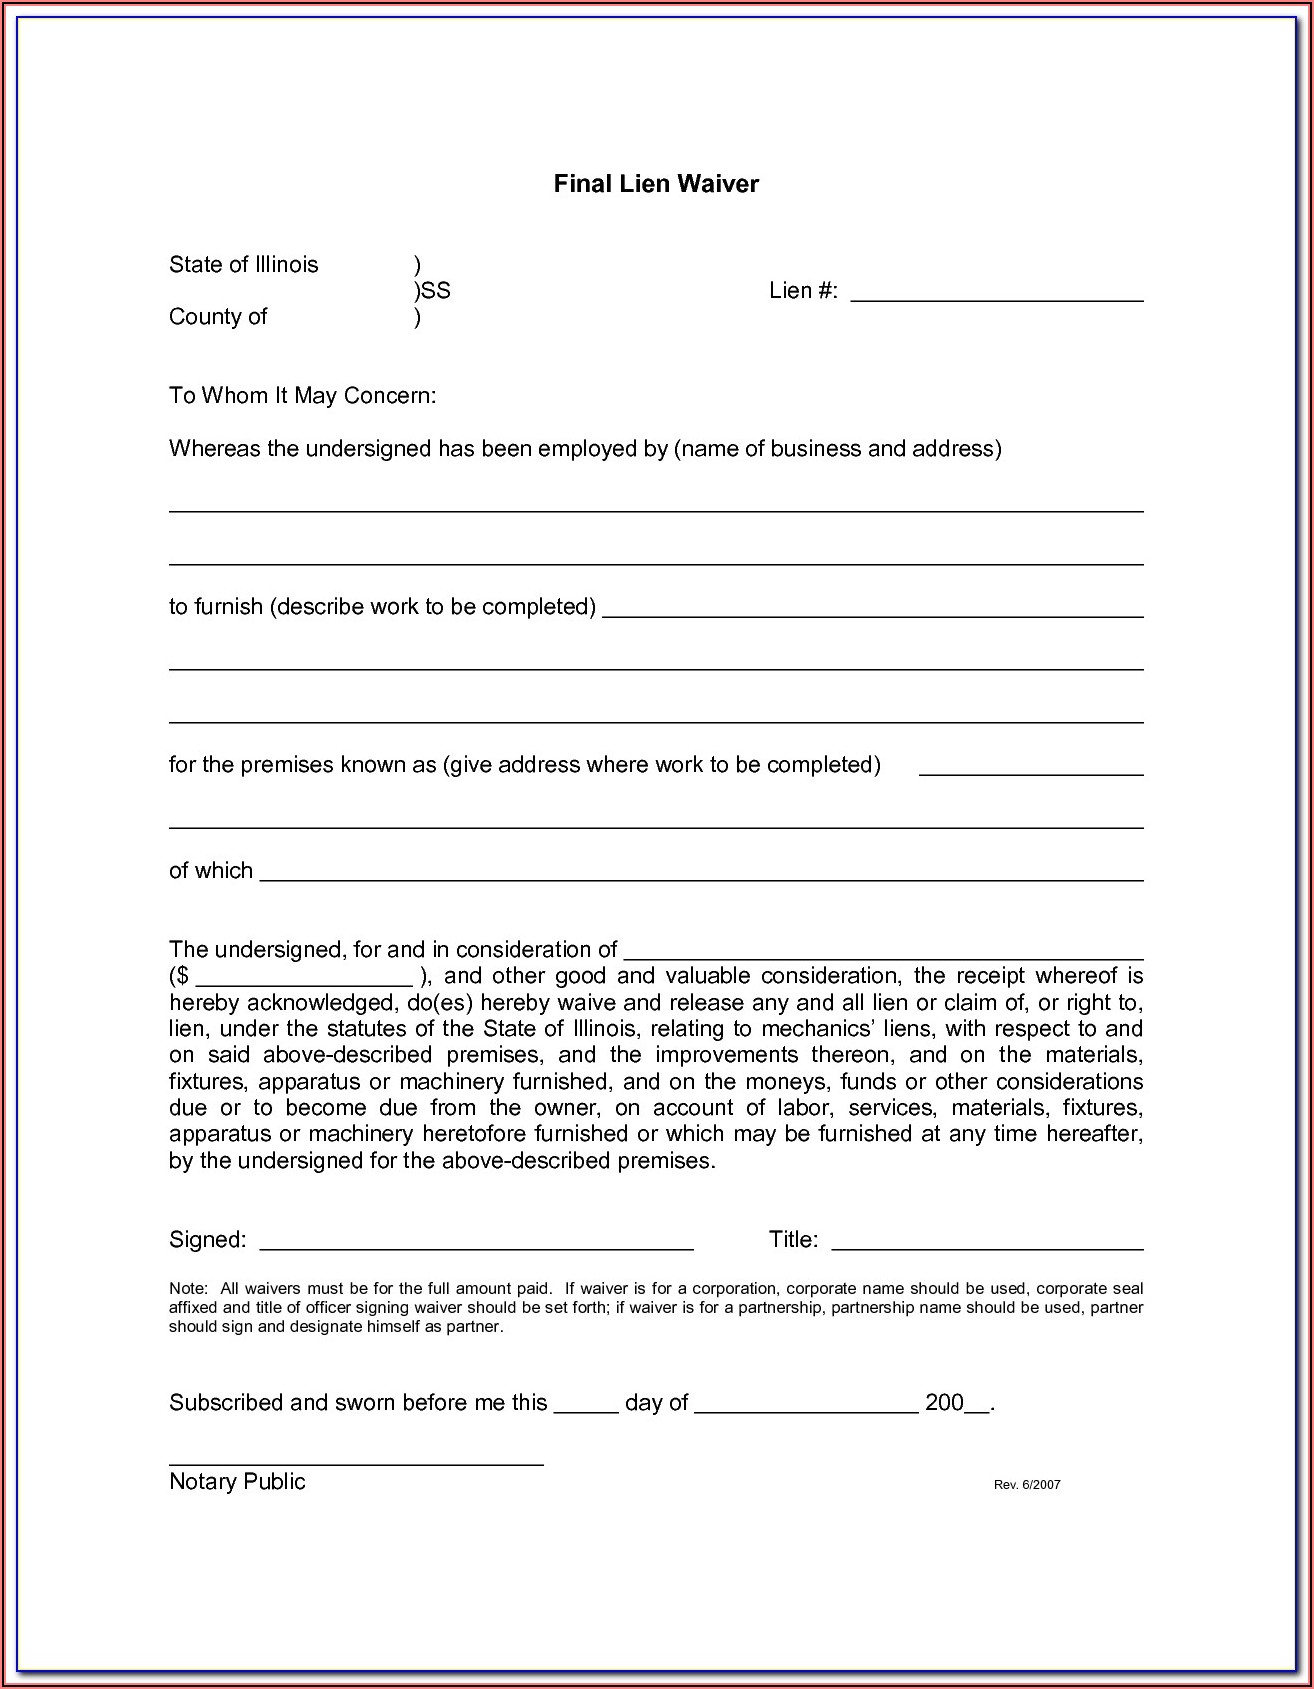 Certificate Of Release Of Federal Tax Lien Form 668(z)